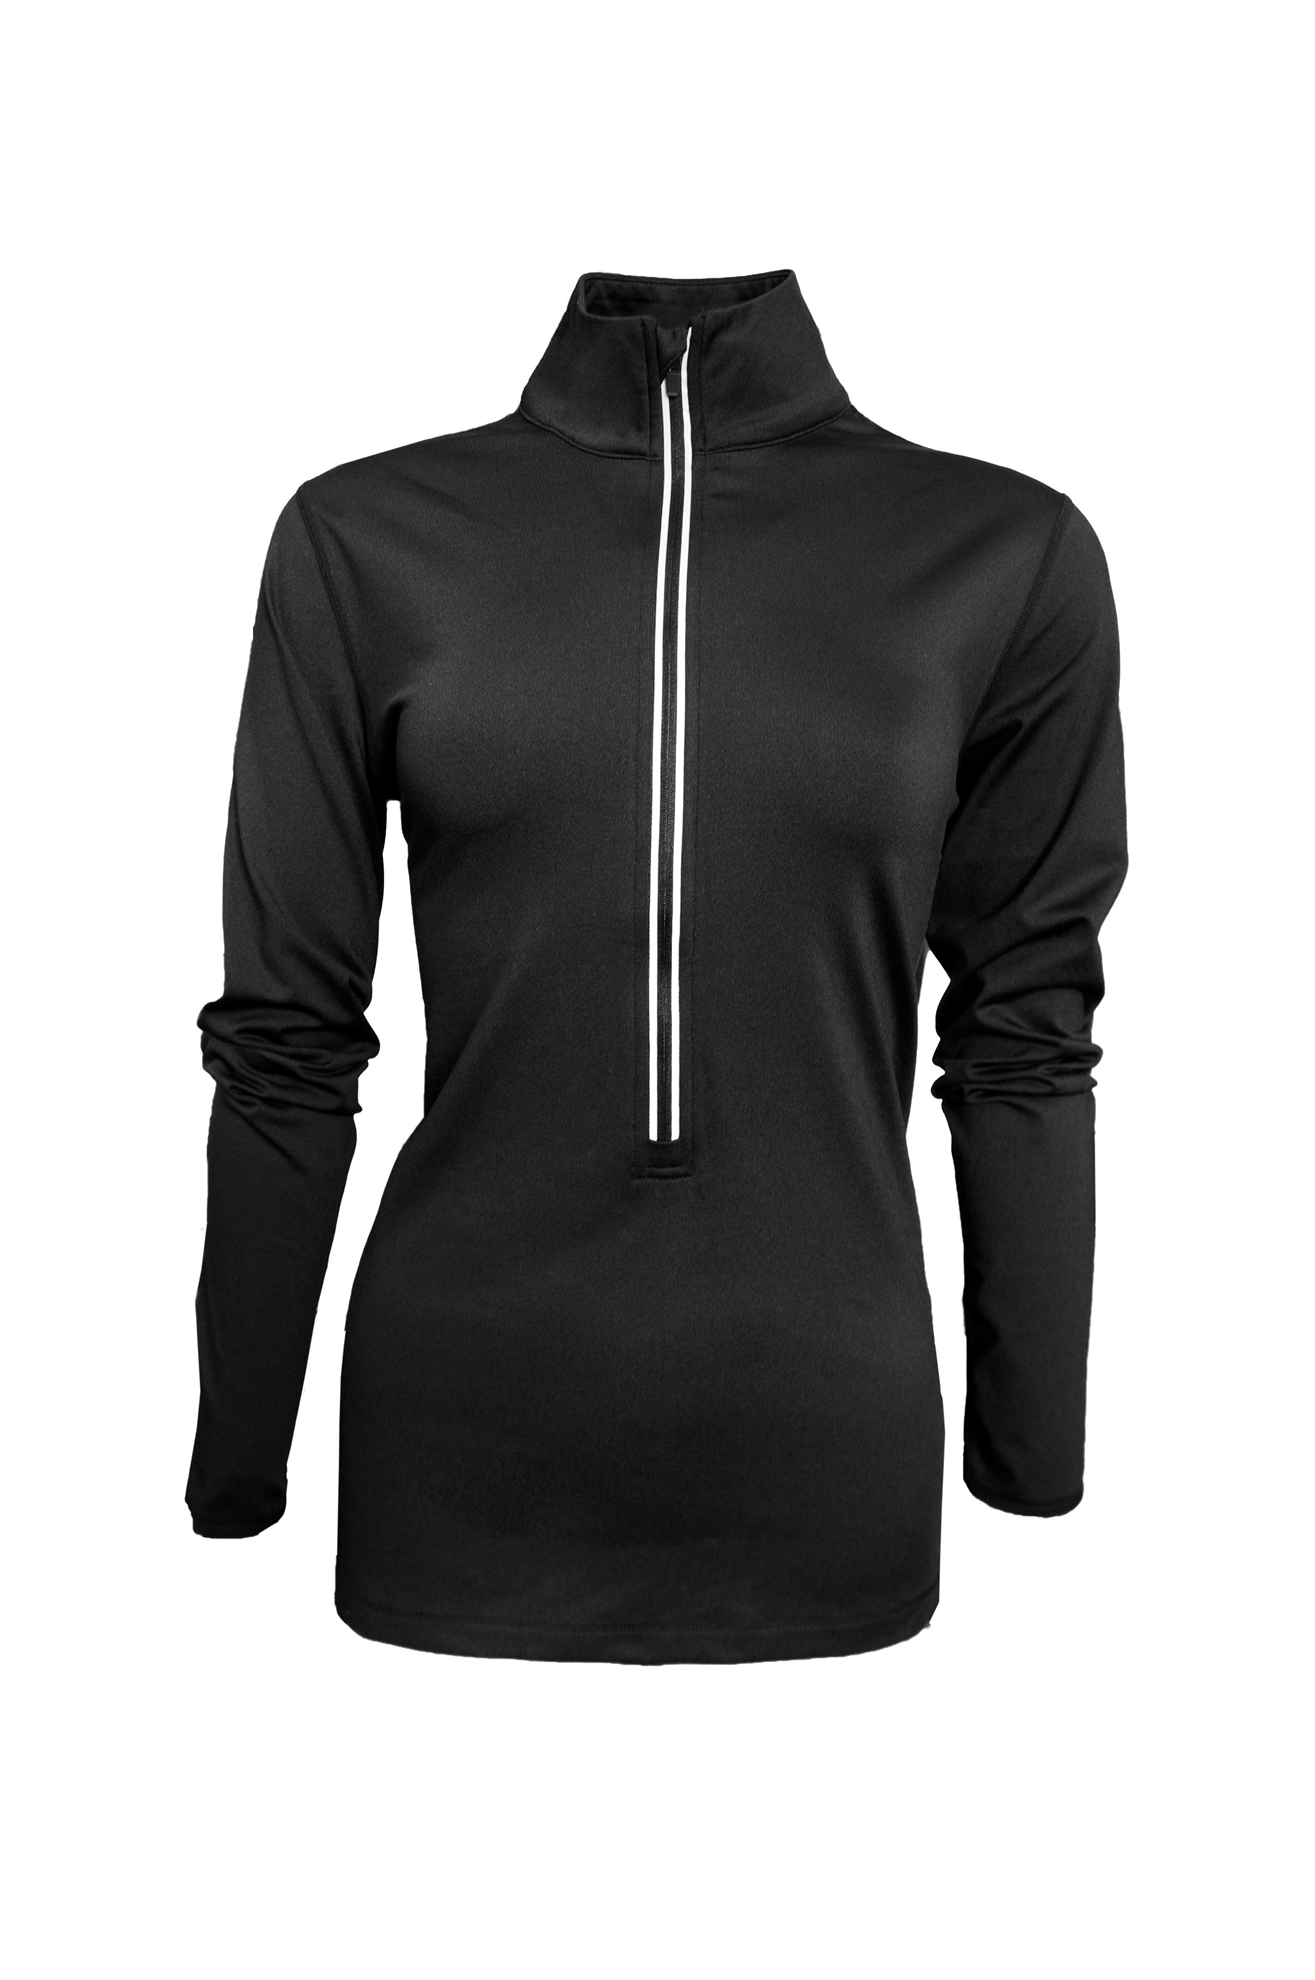 BAW Athletic Wear F531 - Ladies Comfort 1/2 Zip Pullover